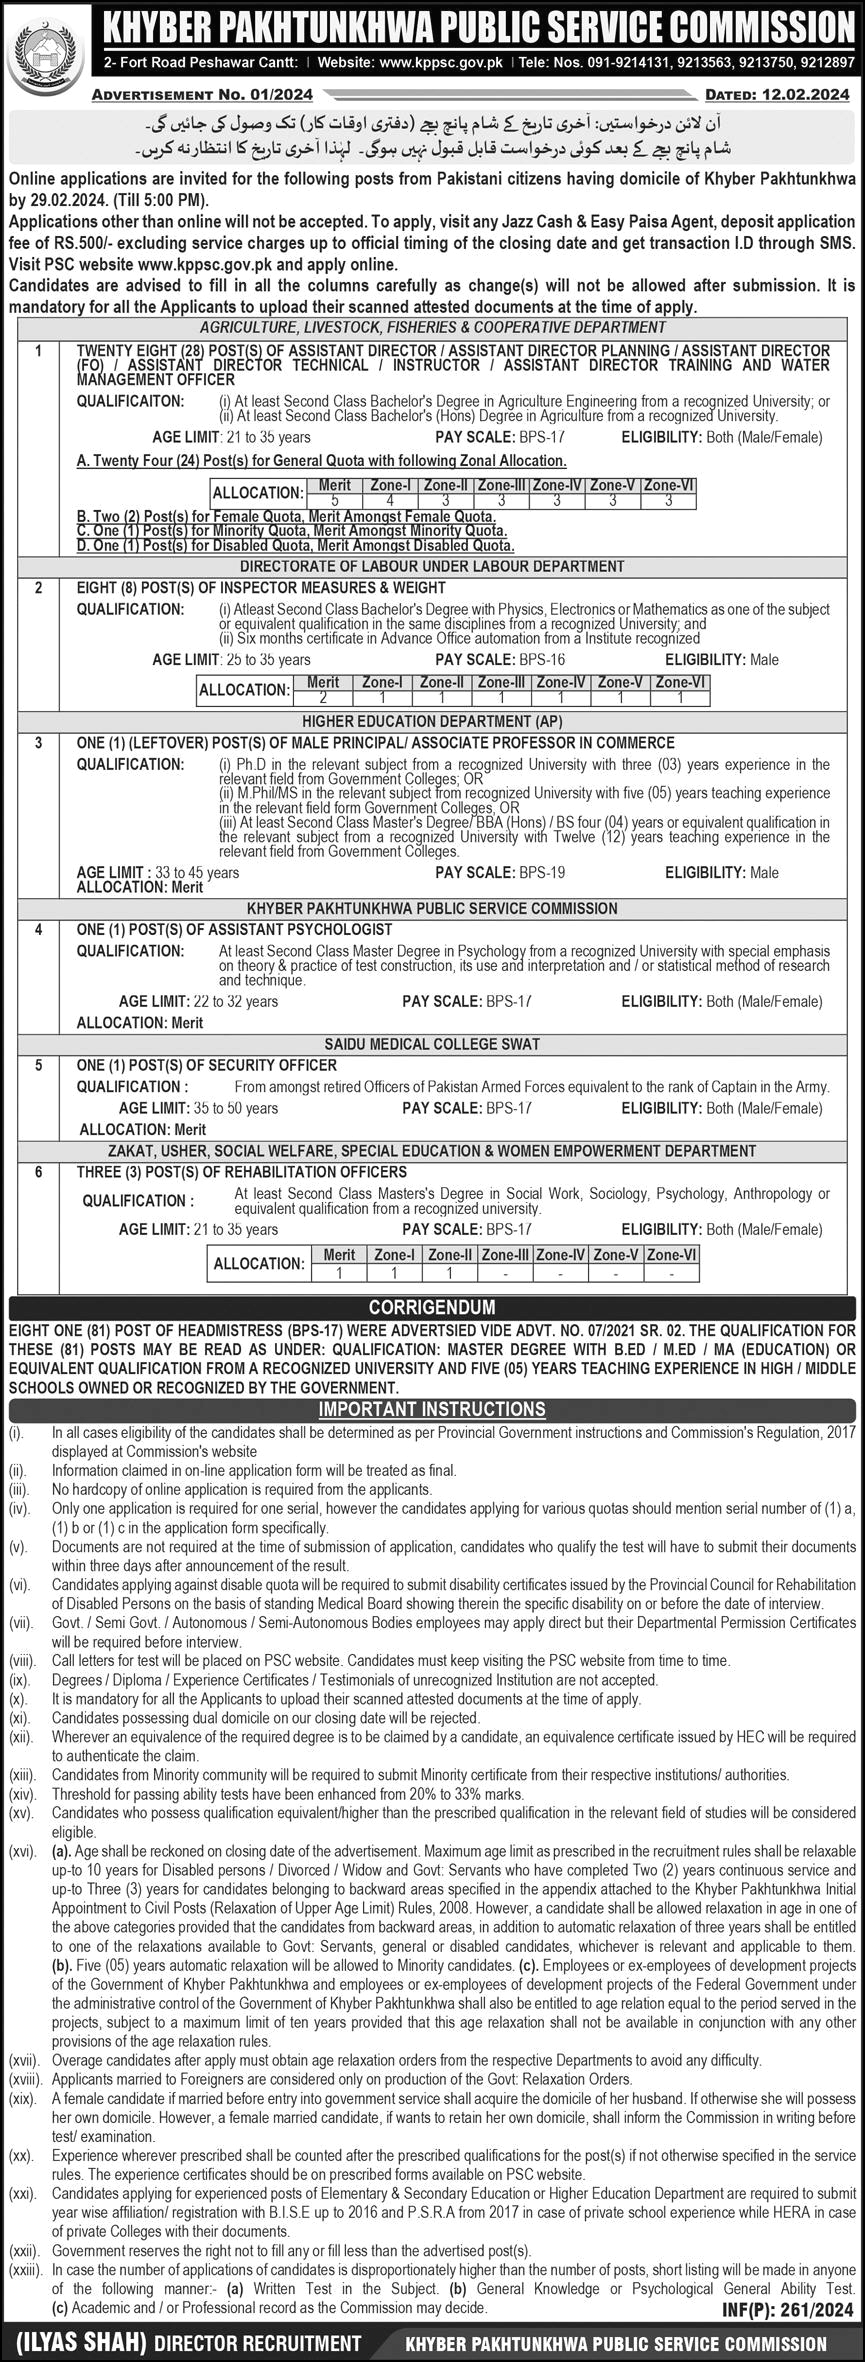 KPPSC Jobs Advertisement 2023 - Apply Online - www.kppsc.gov.pk Advertisement